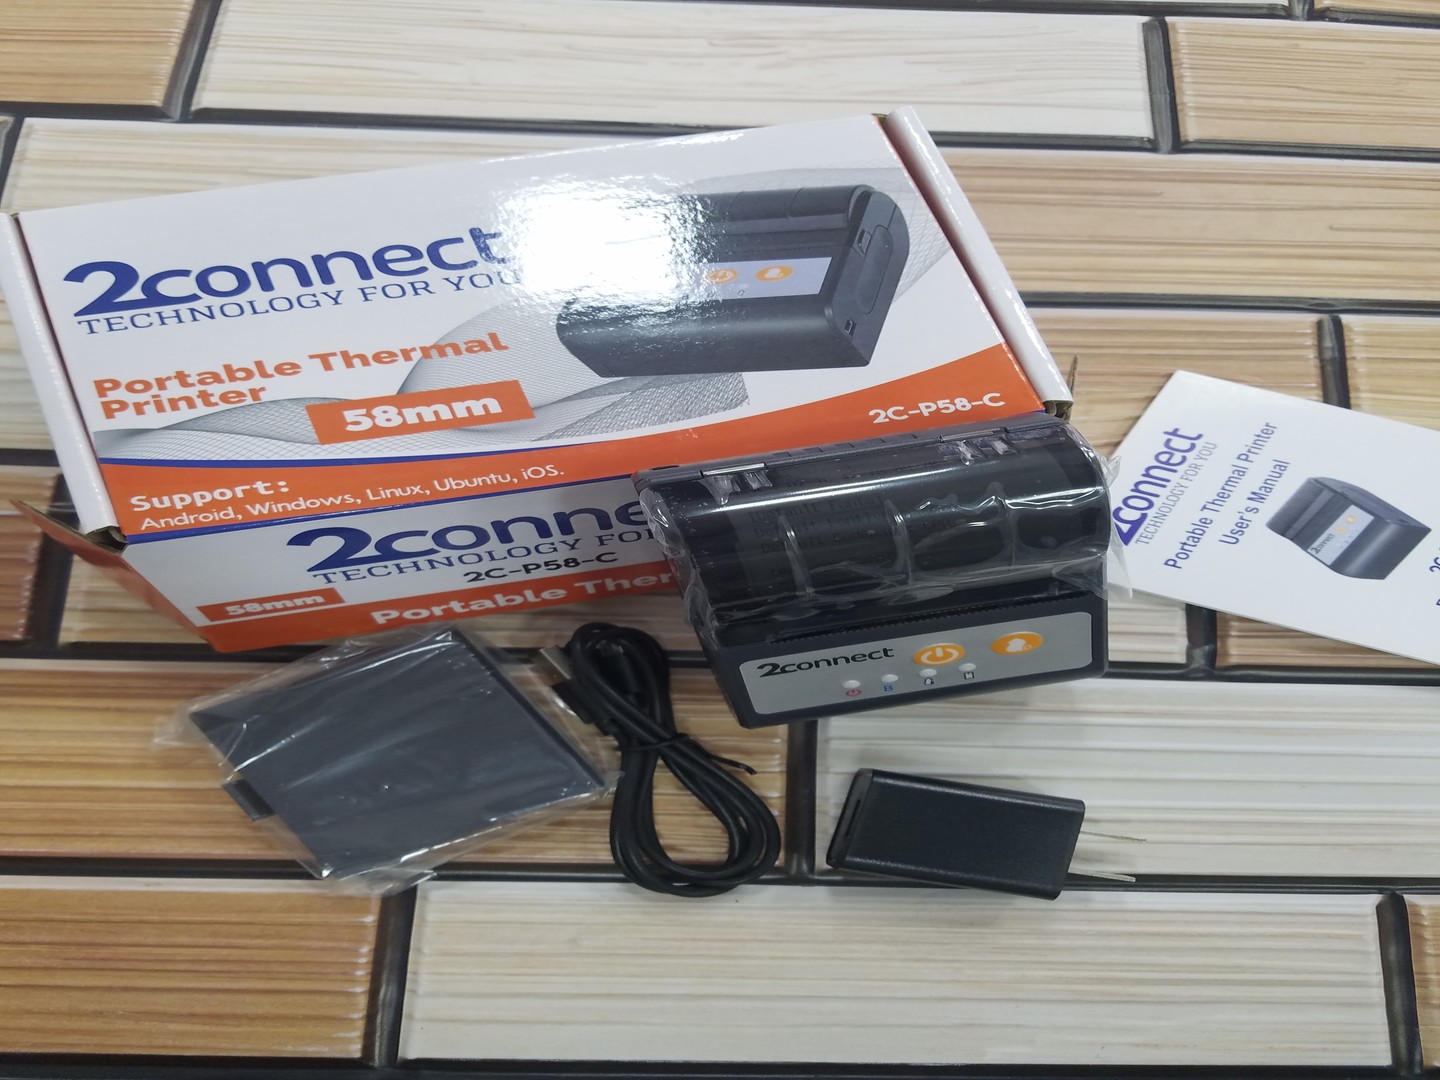 impresoras y scanners - Impresora termica bluetooth y USB de 58mm 2 connect  2